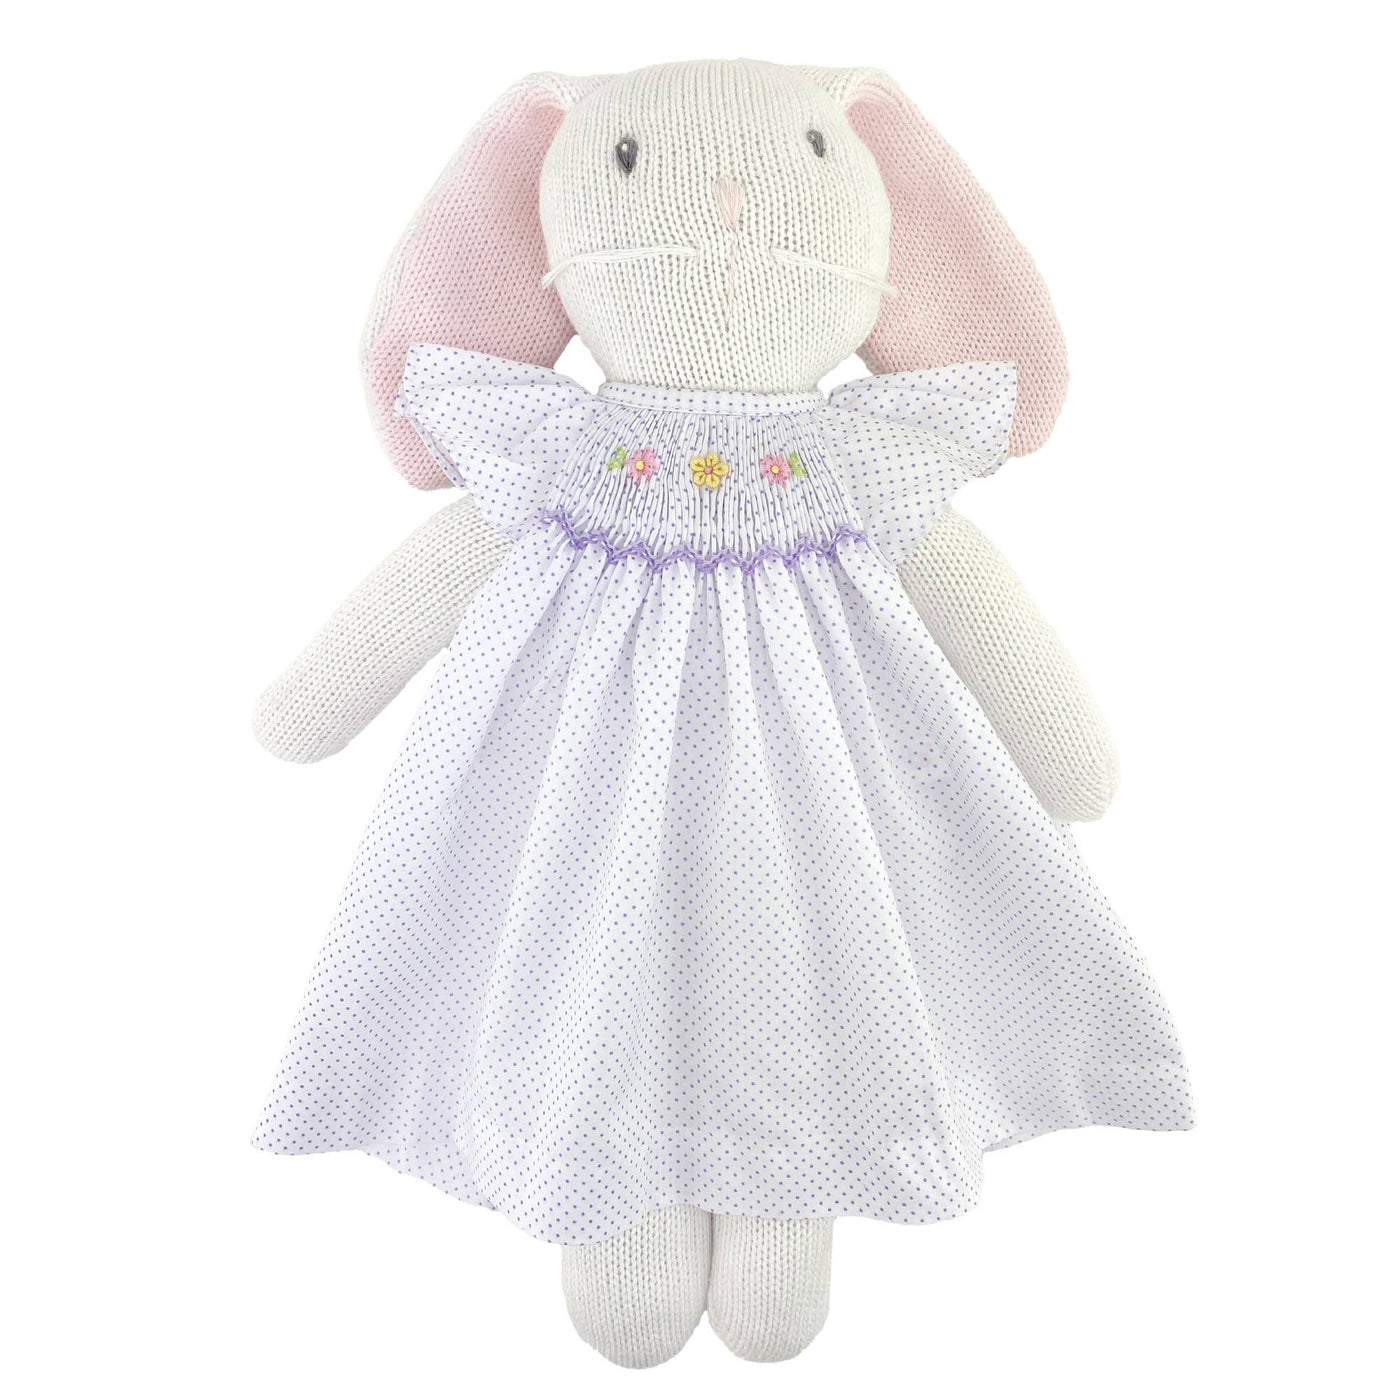 Knit Bunny Doll with Lavender Dot Dress: 14"